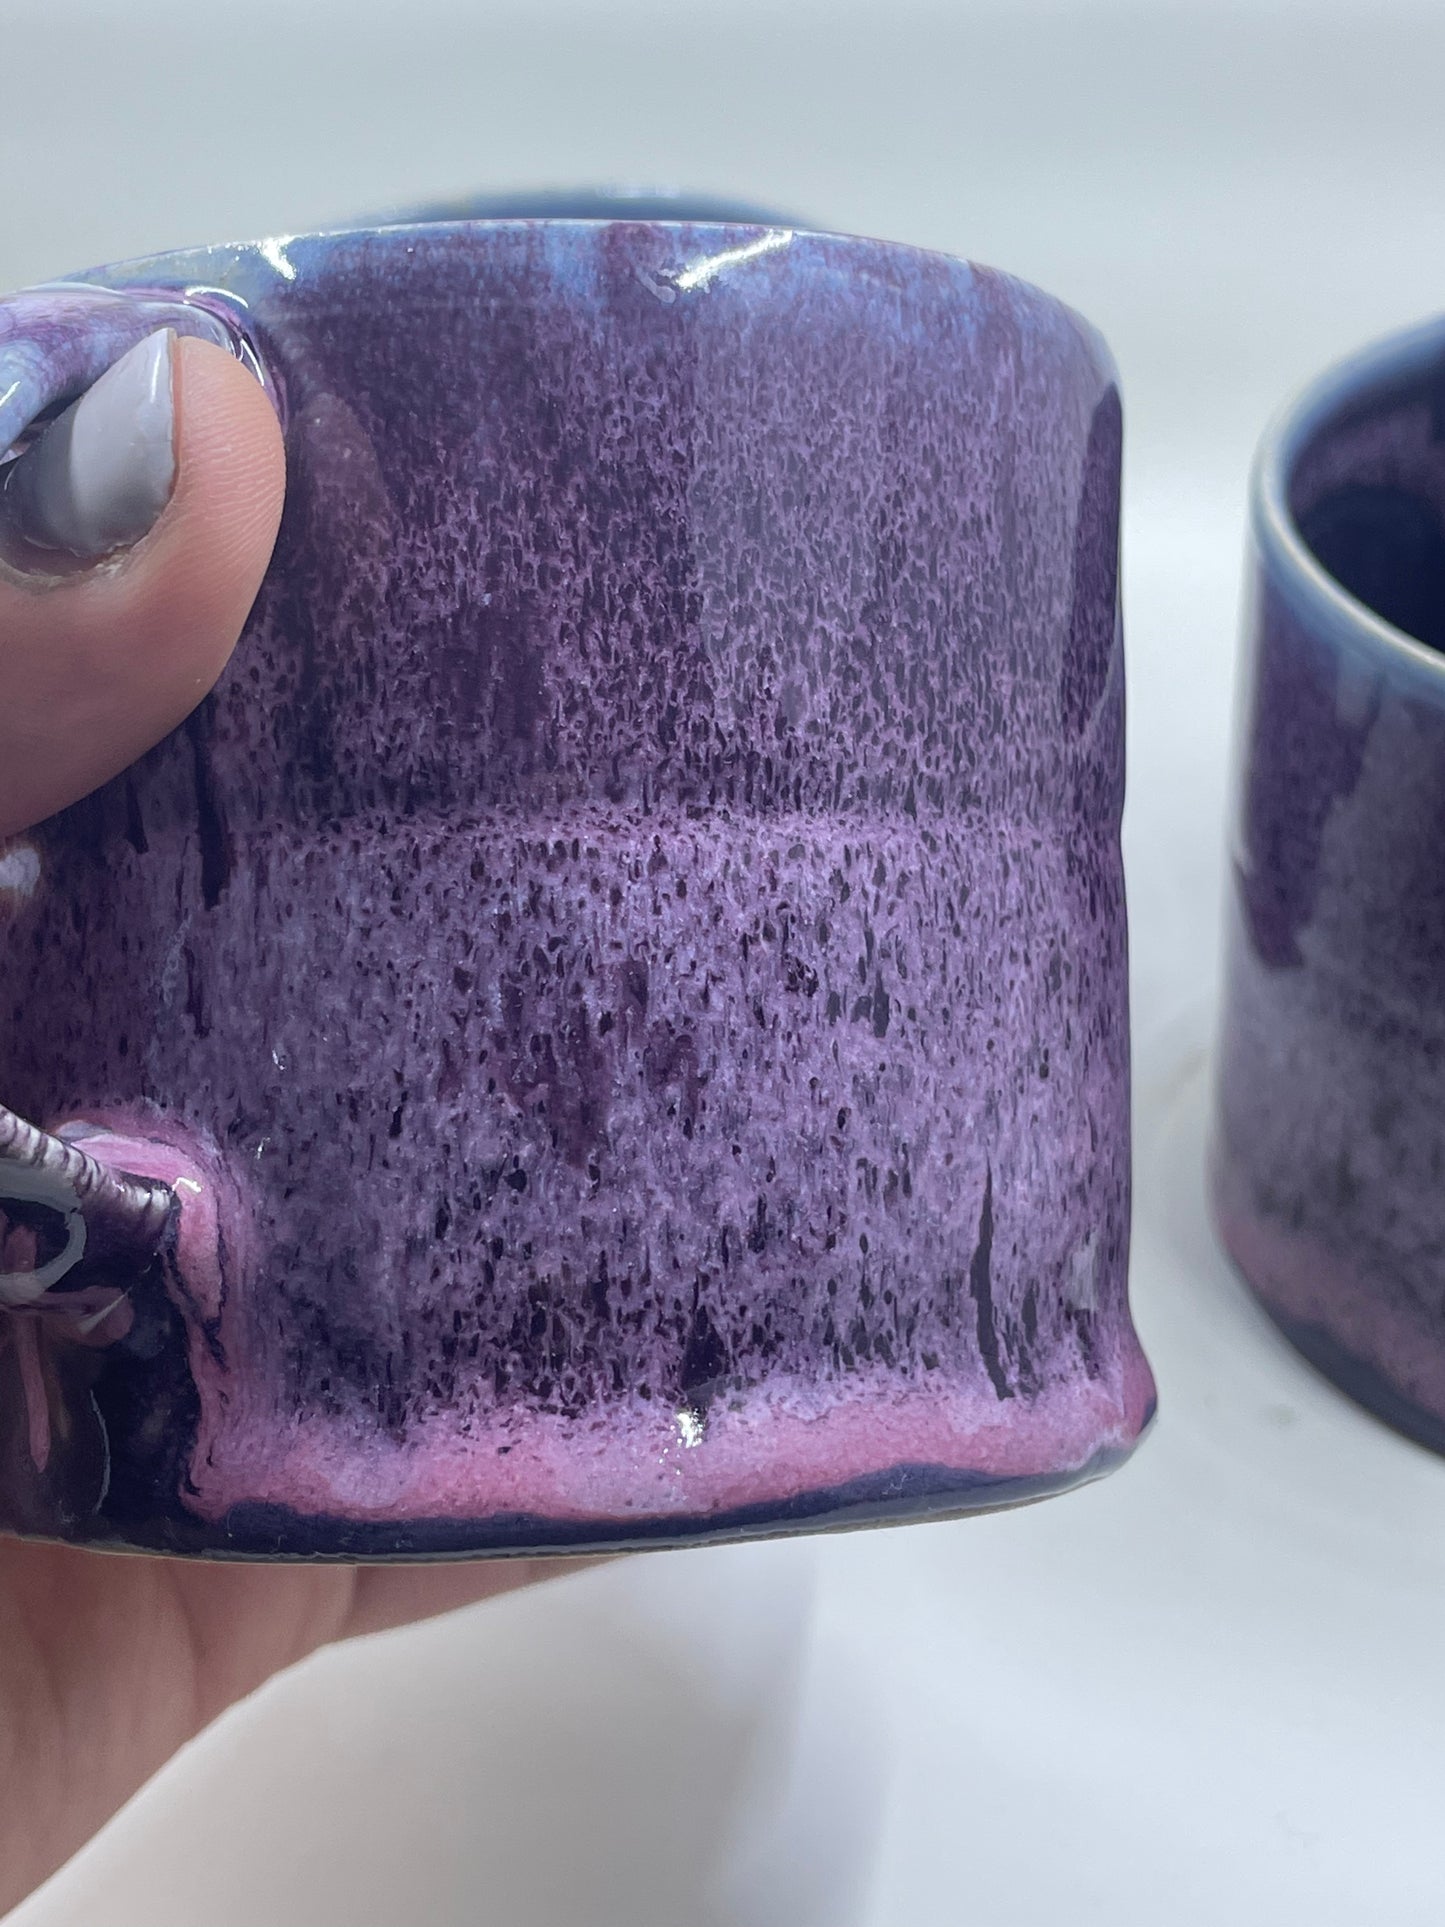 Crushed Velvet Mugs Textured Handles